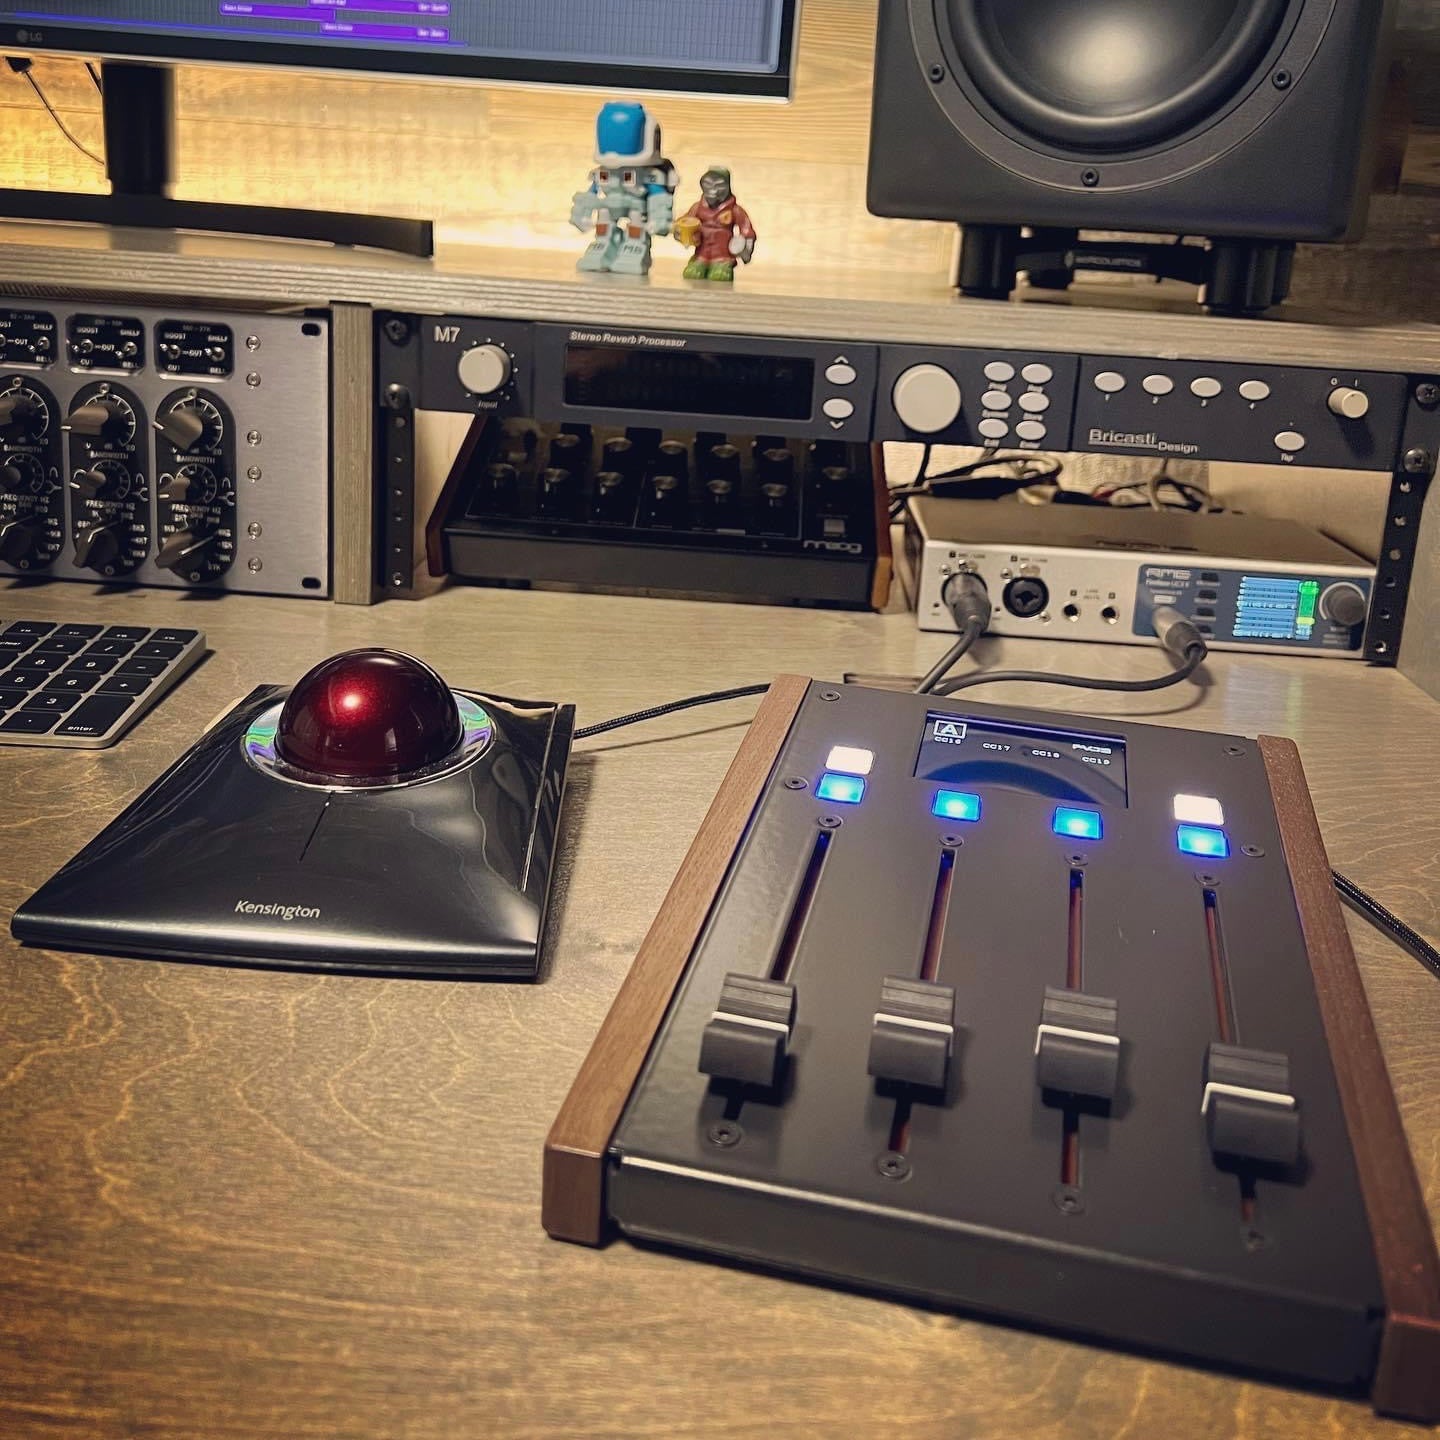 FVDE MIDI CC Controller